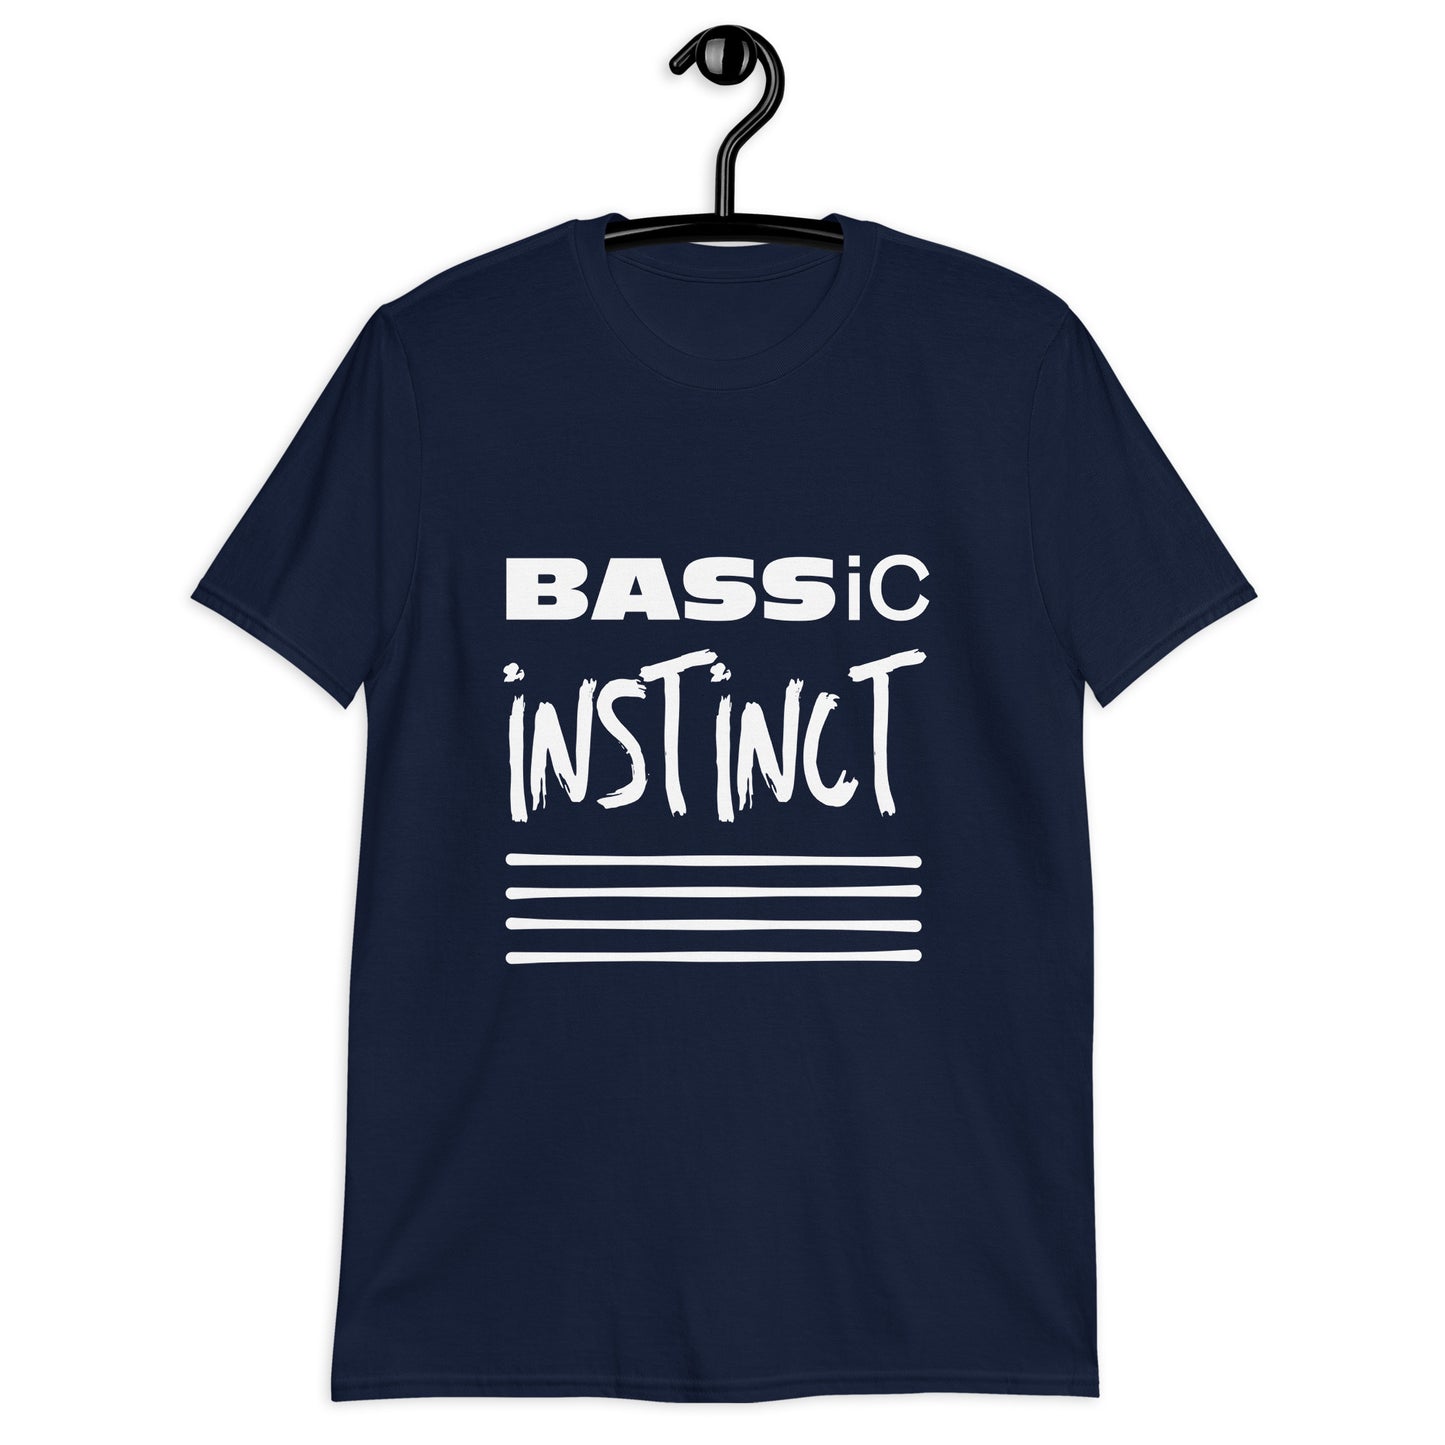 Bassic Instinct. Unisex T-Shirt for bassists